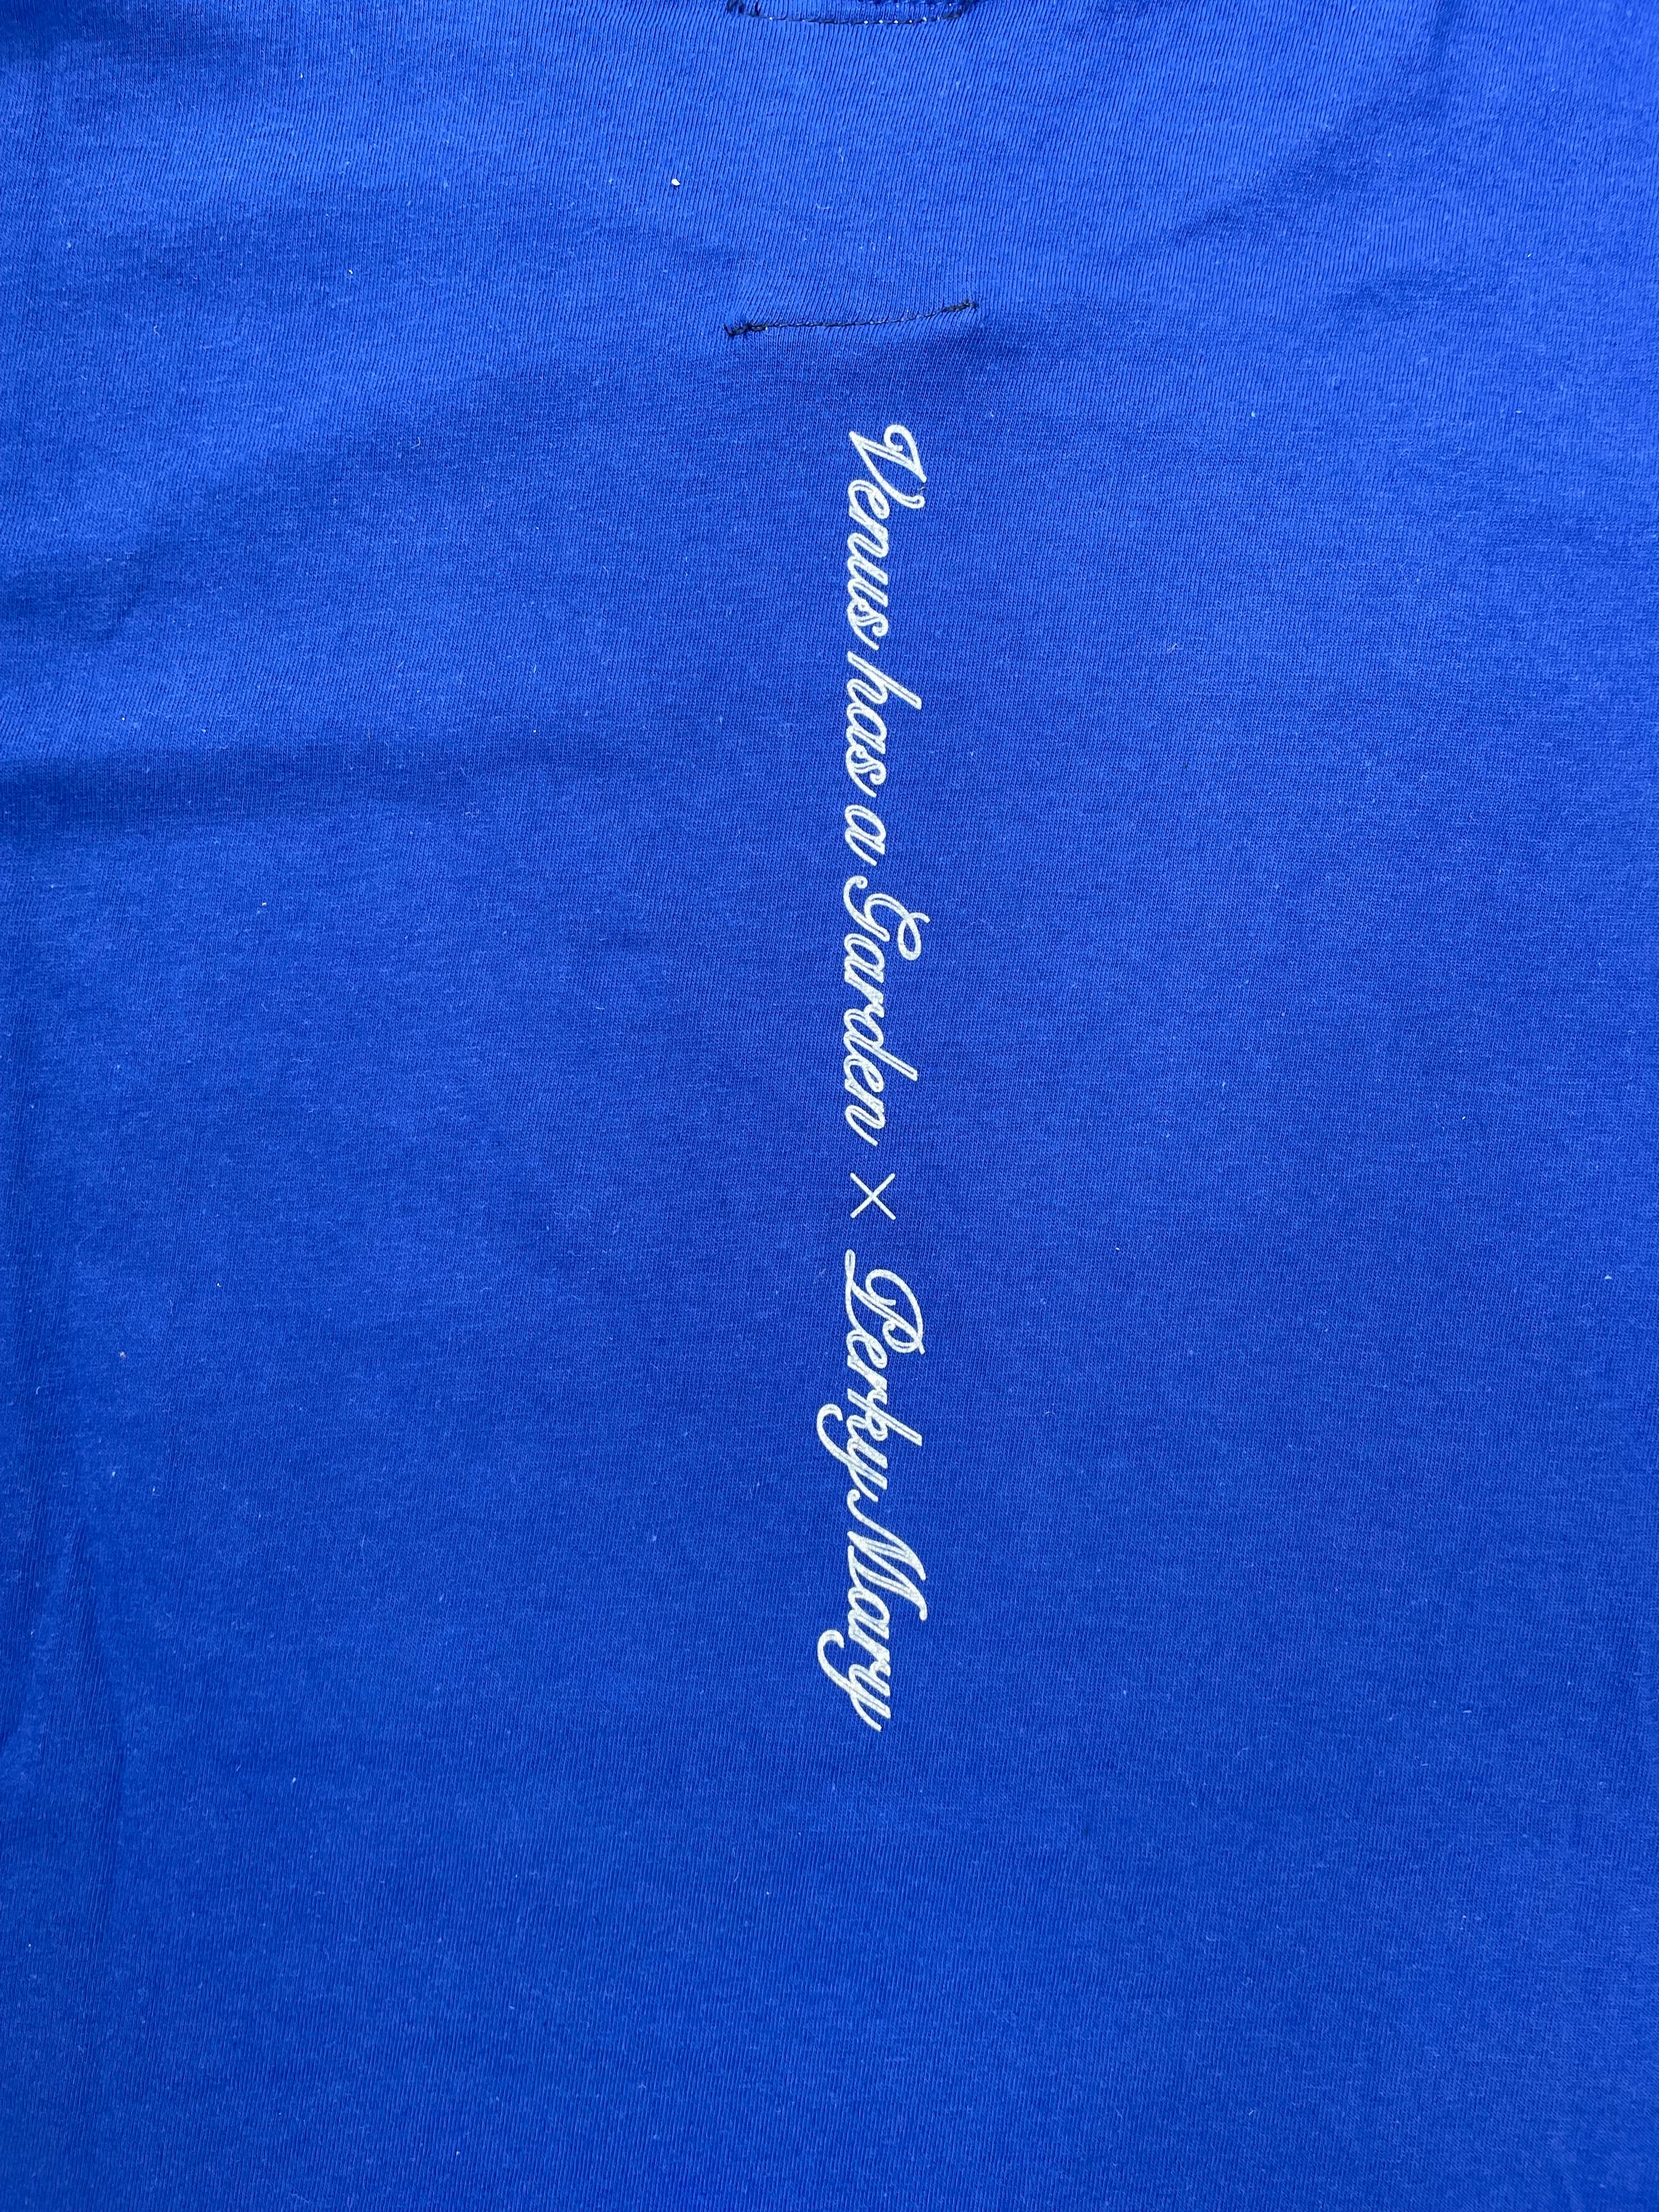 Blue VhaGxPM T-shirt